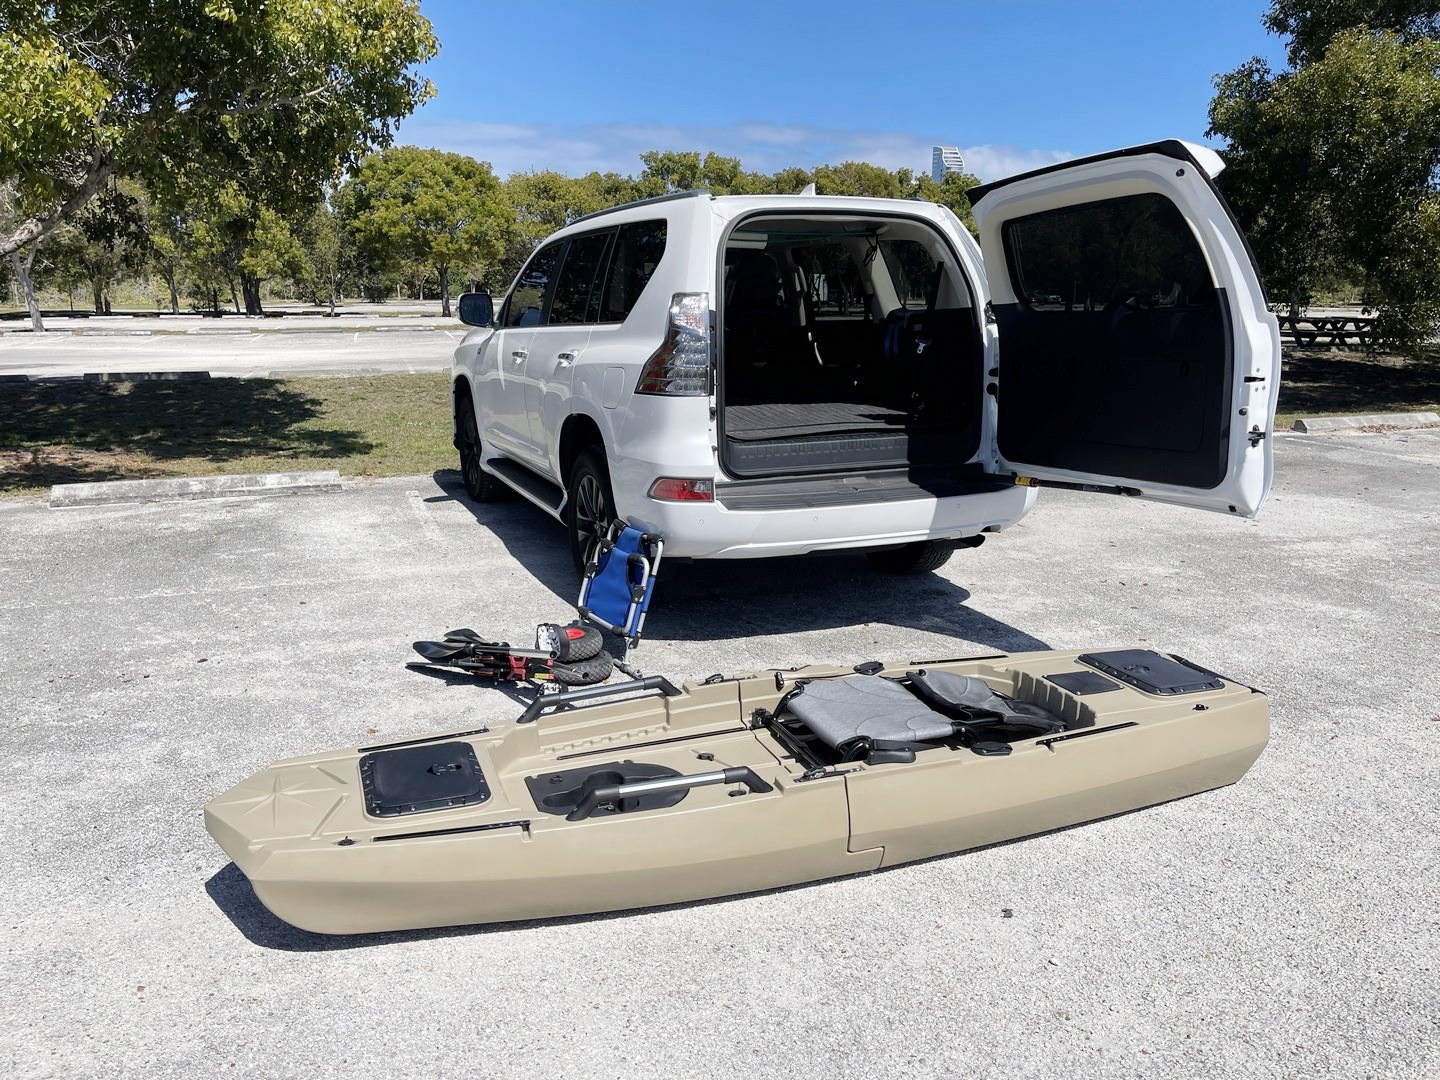 Modular Heavy Duty Pedal Drive Fishing Kayak